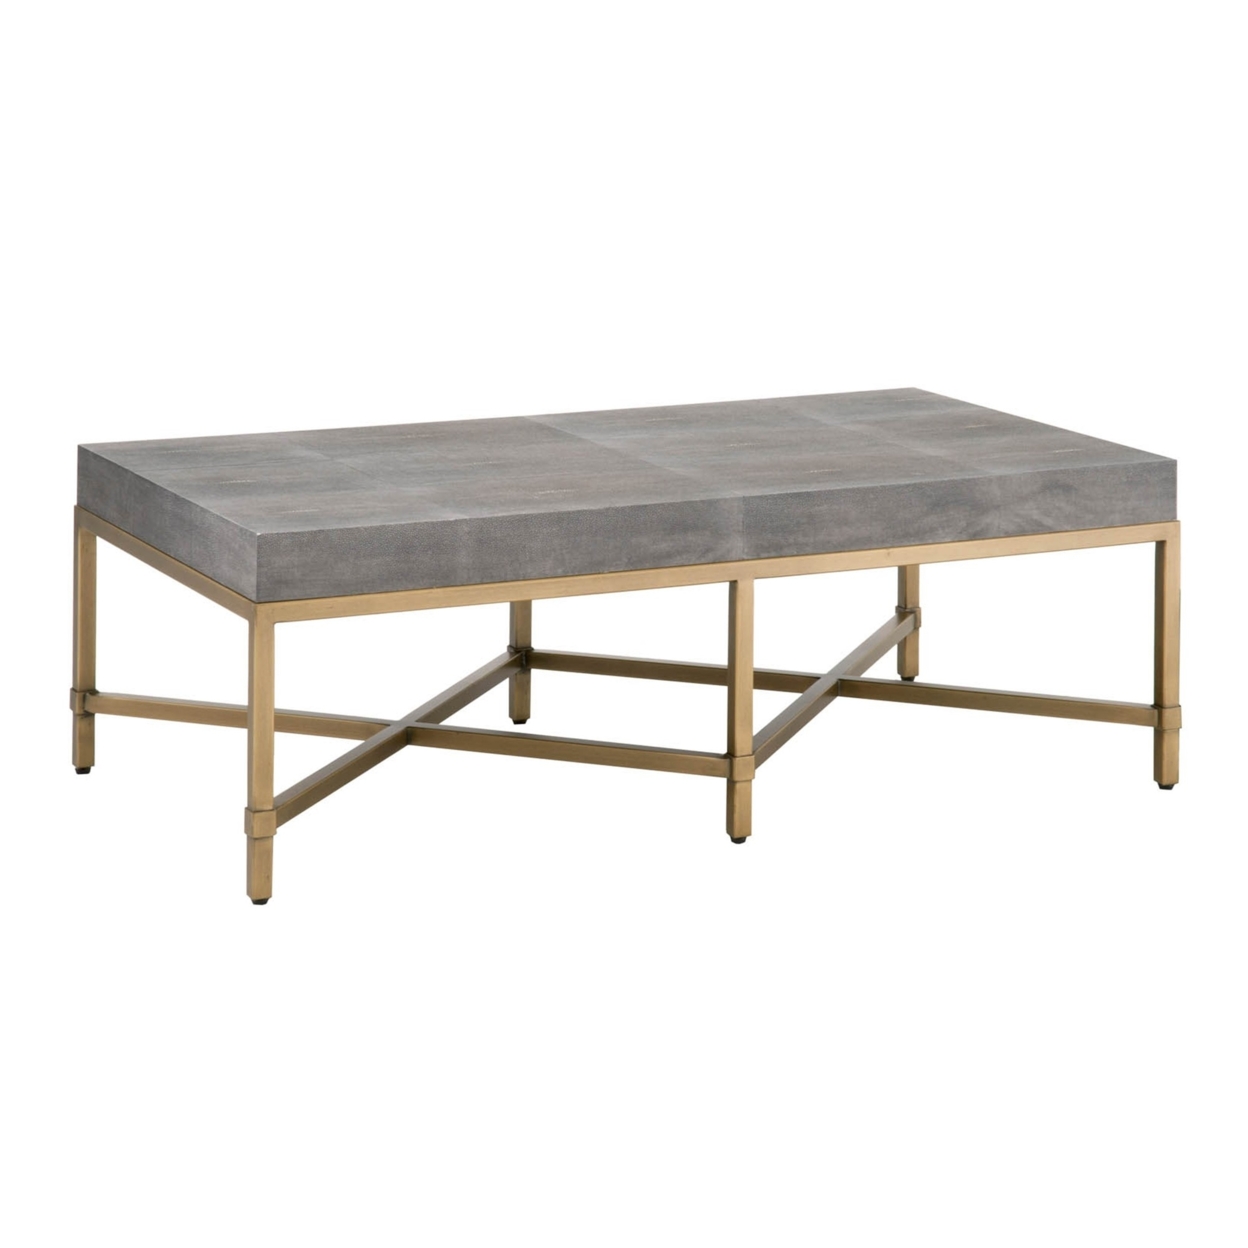 Resin Top Rectangular Coffee Table With Metal Base, Gray And Gold- Saltoro Sherpi